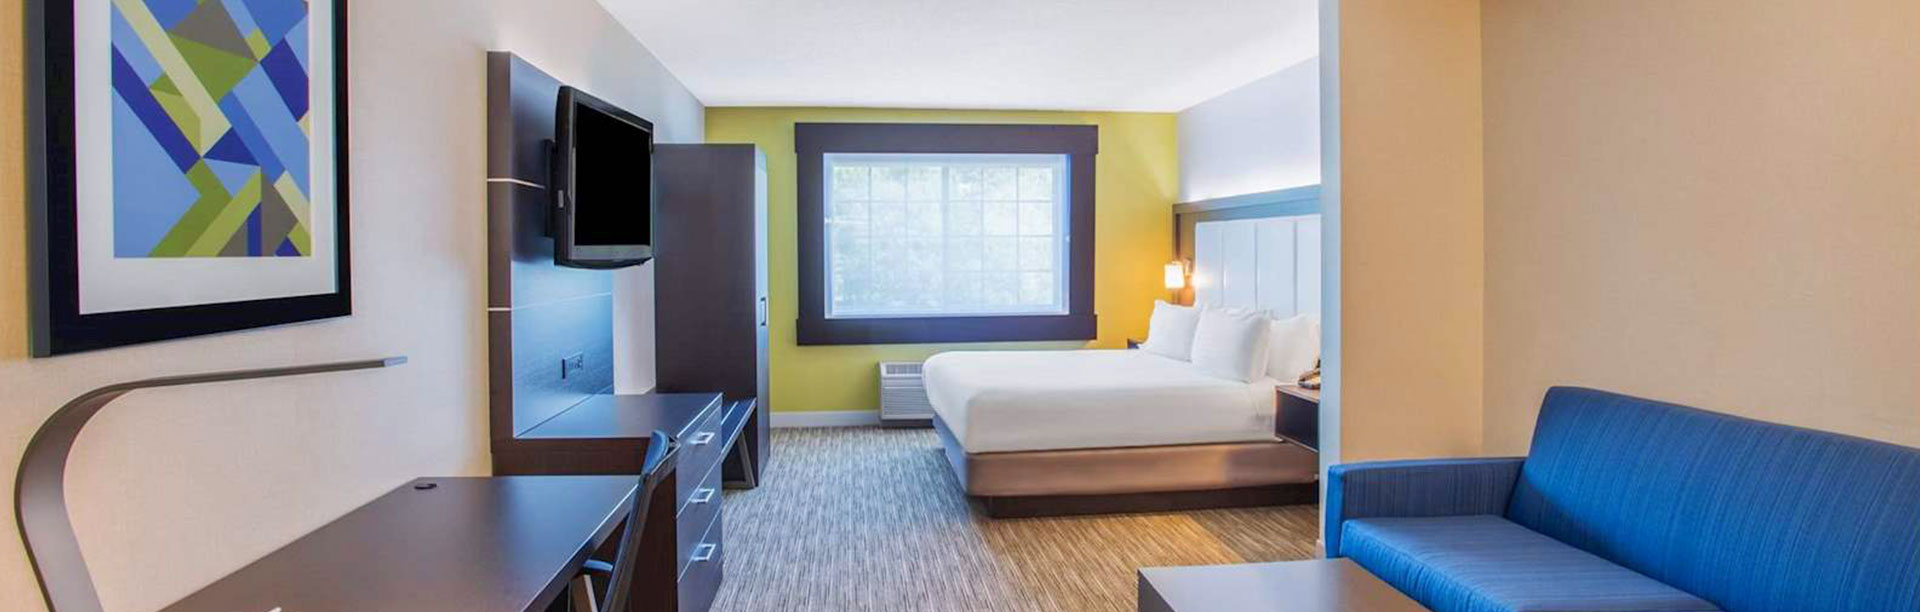 Guestrooms at Holiday Inn Express Hotel & Suites Atascadero